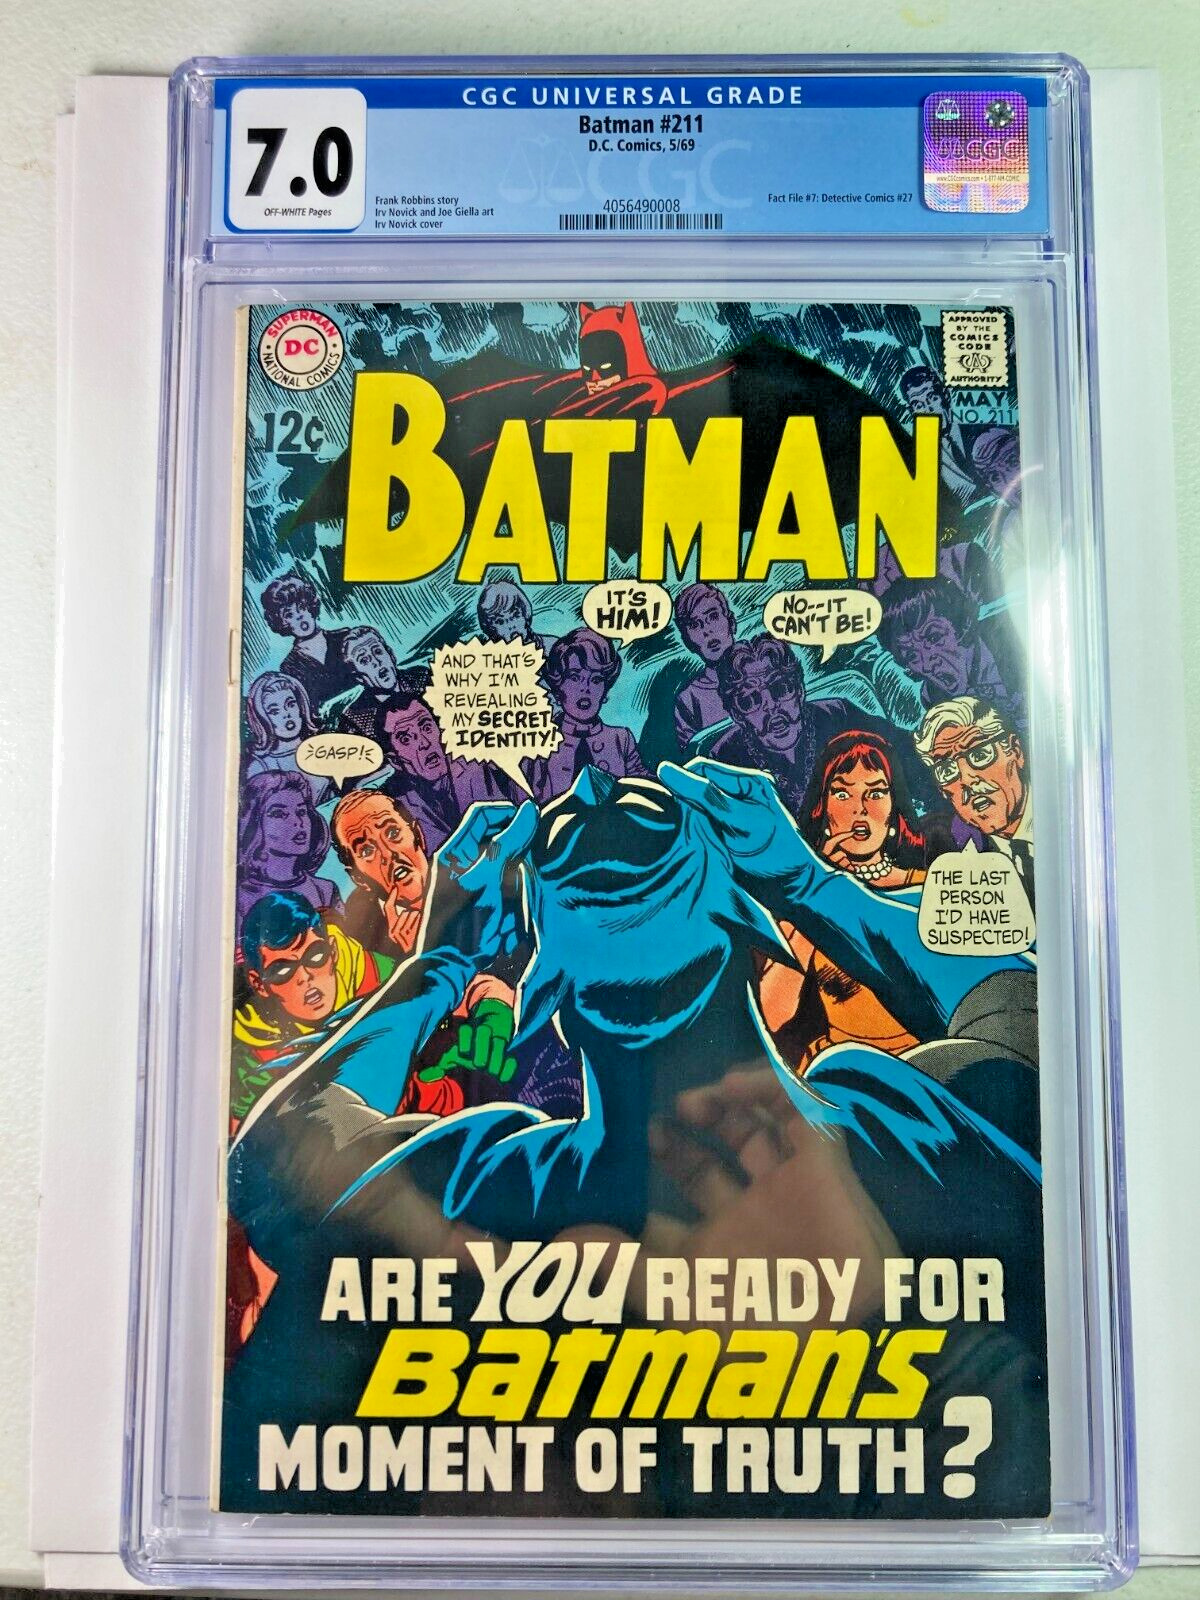 Batman #211, CGC CERT GRADE 7.0, Free Domestic Shipping, My Lot 16150